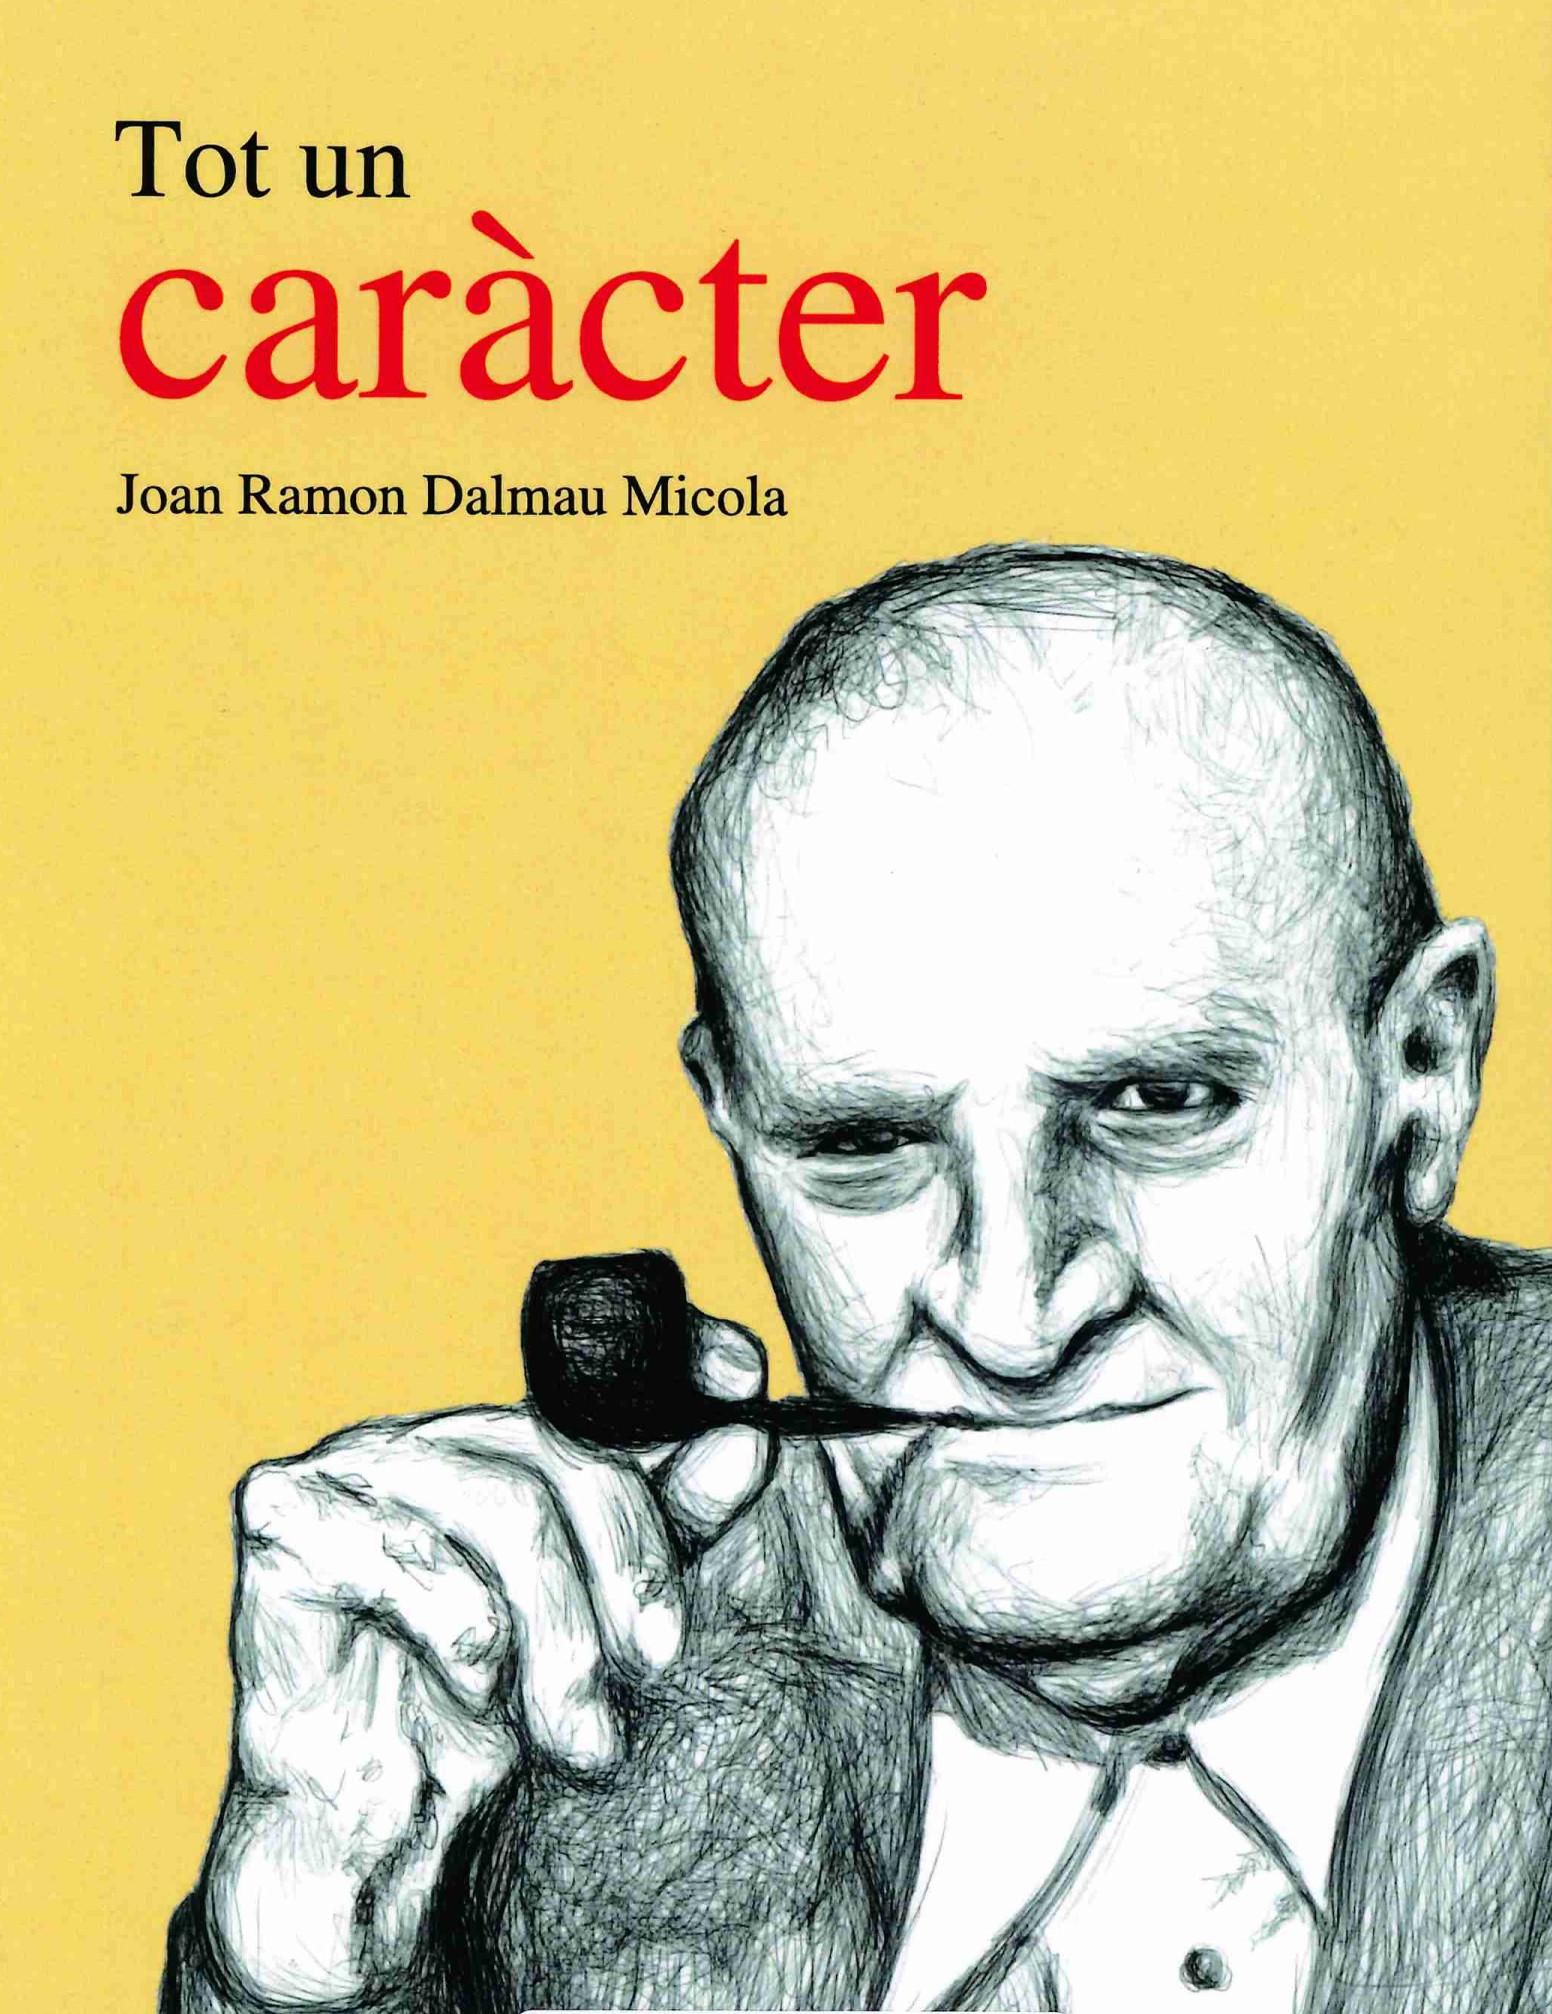 Presentació llibre Joan Ramon Dalmau Micola 